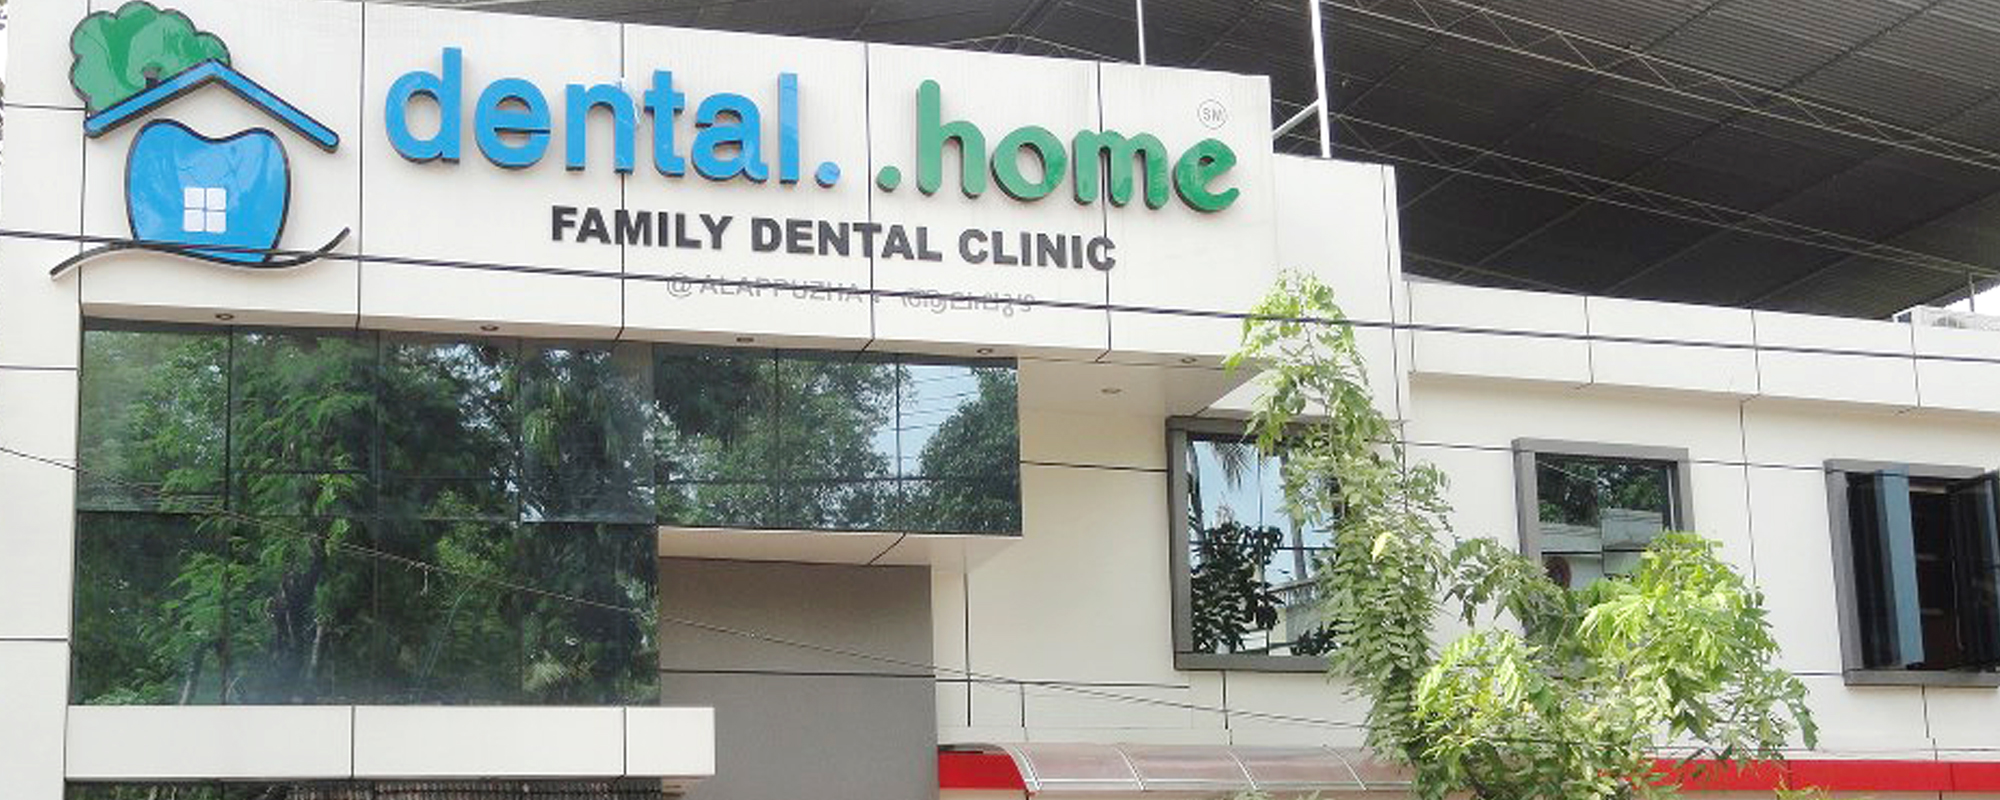 dental home